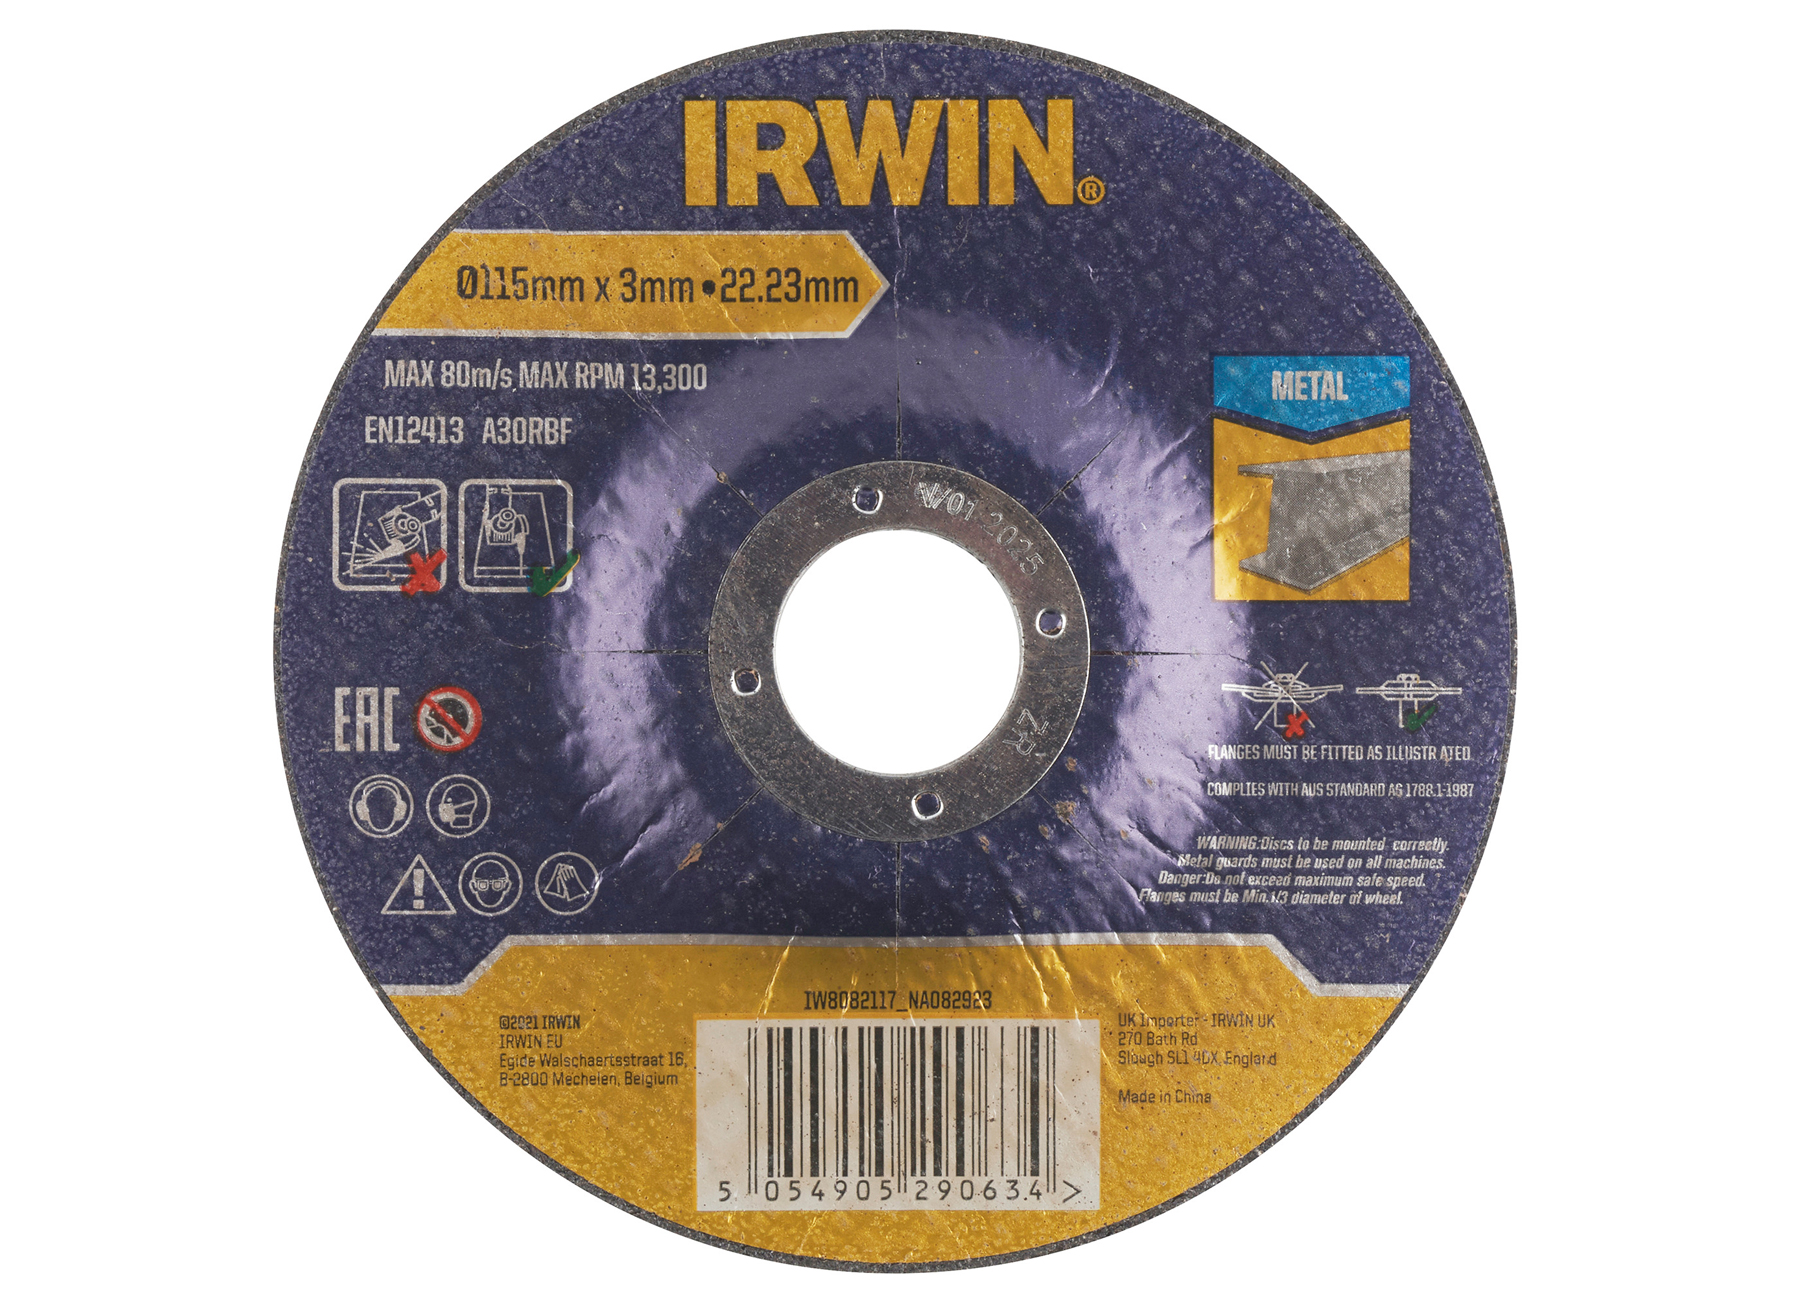 IRWIN DISQUE A TRONCONNER METAL, PLAT - 115MM X 3MM